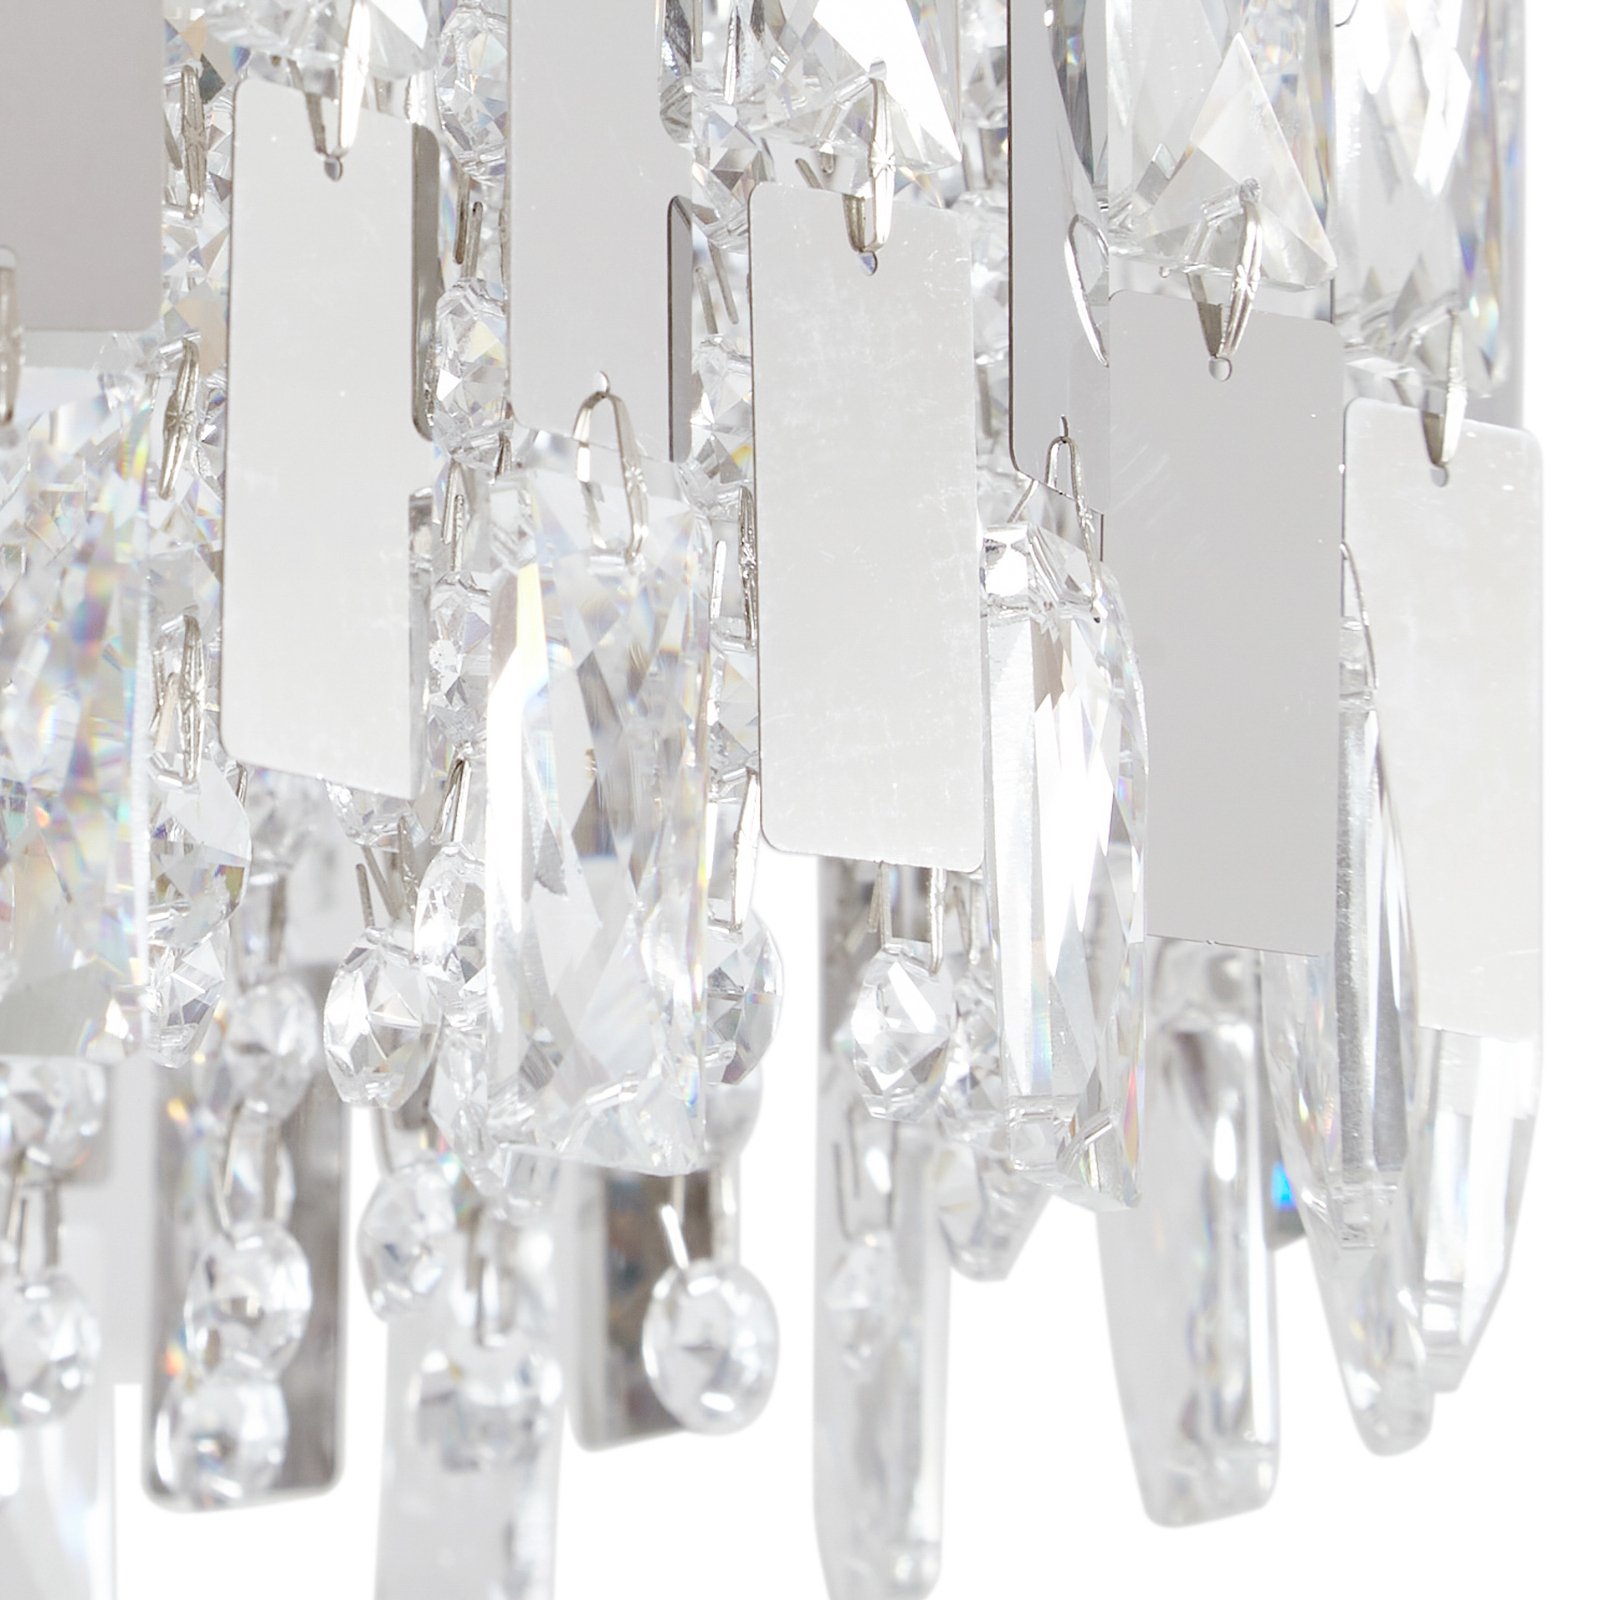 Plafondlamp Lucande Arcan, kristalglas, chroom